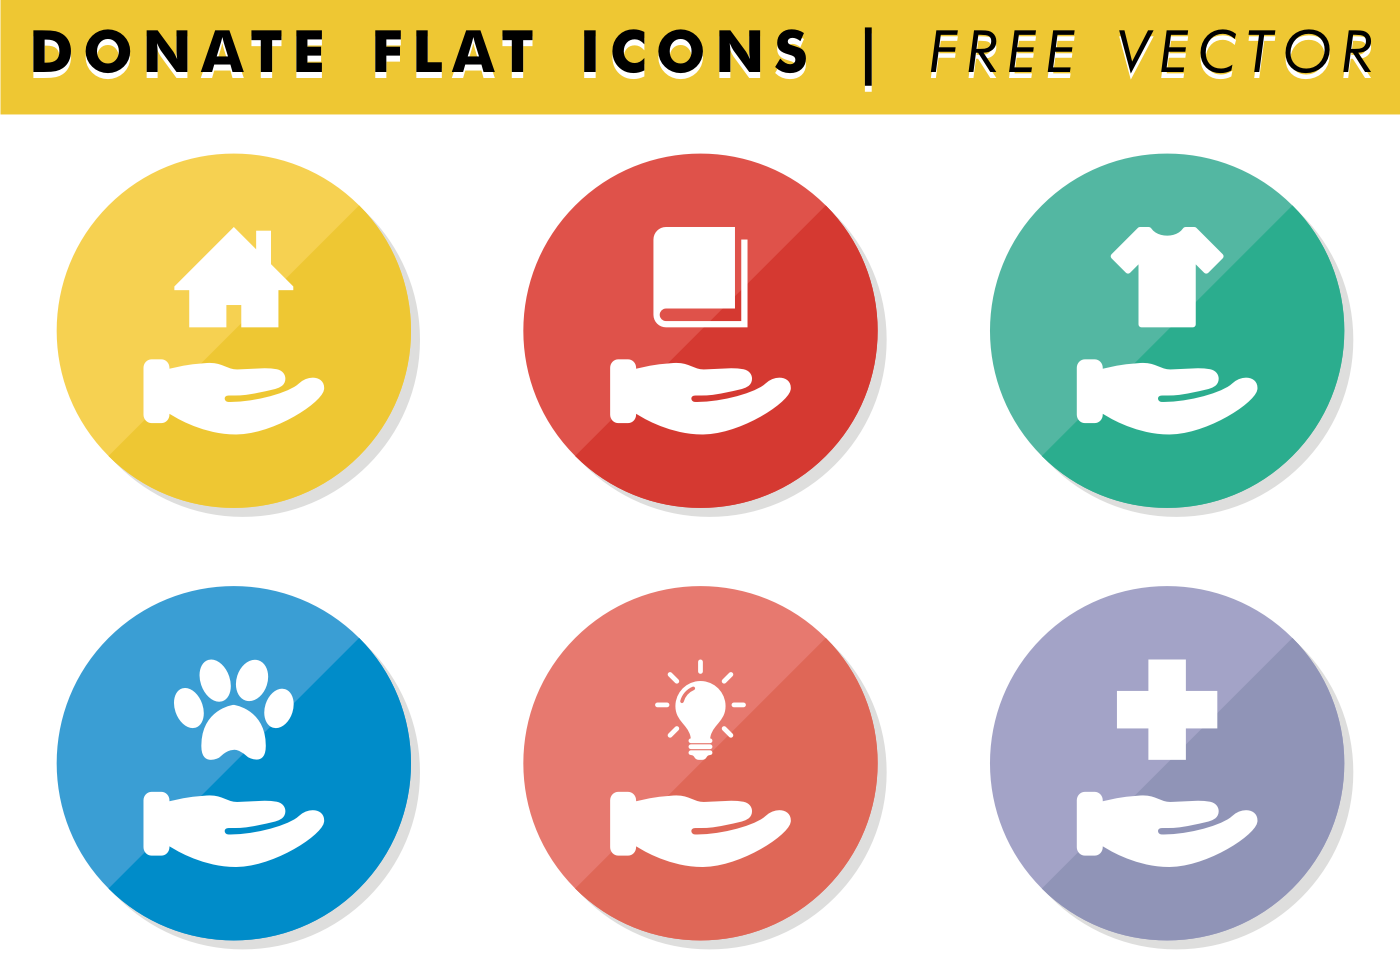 Donate Flat Icons Free Vector Download Free Vectors Clipart Graphics Vector Art